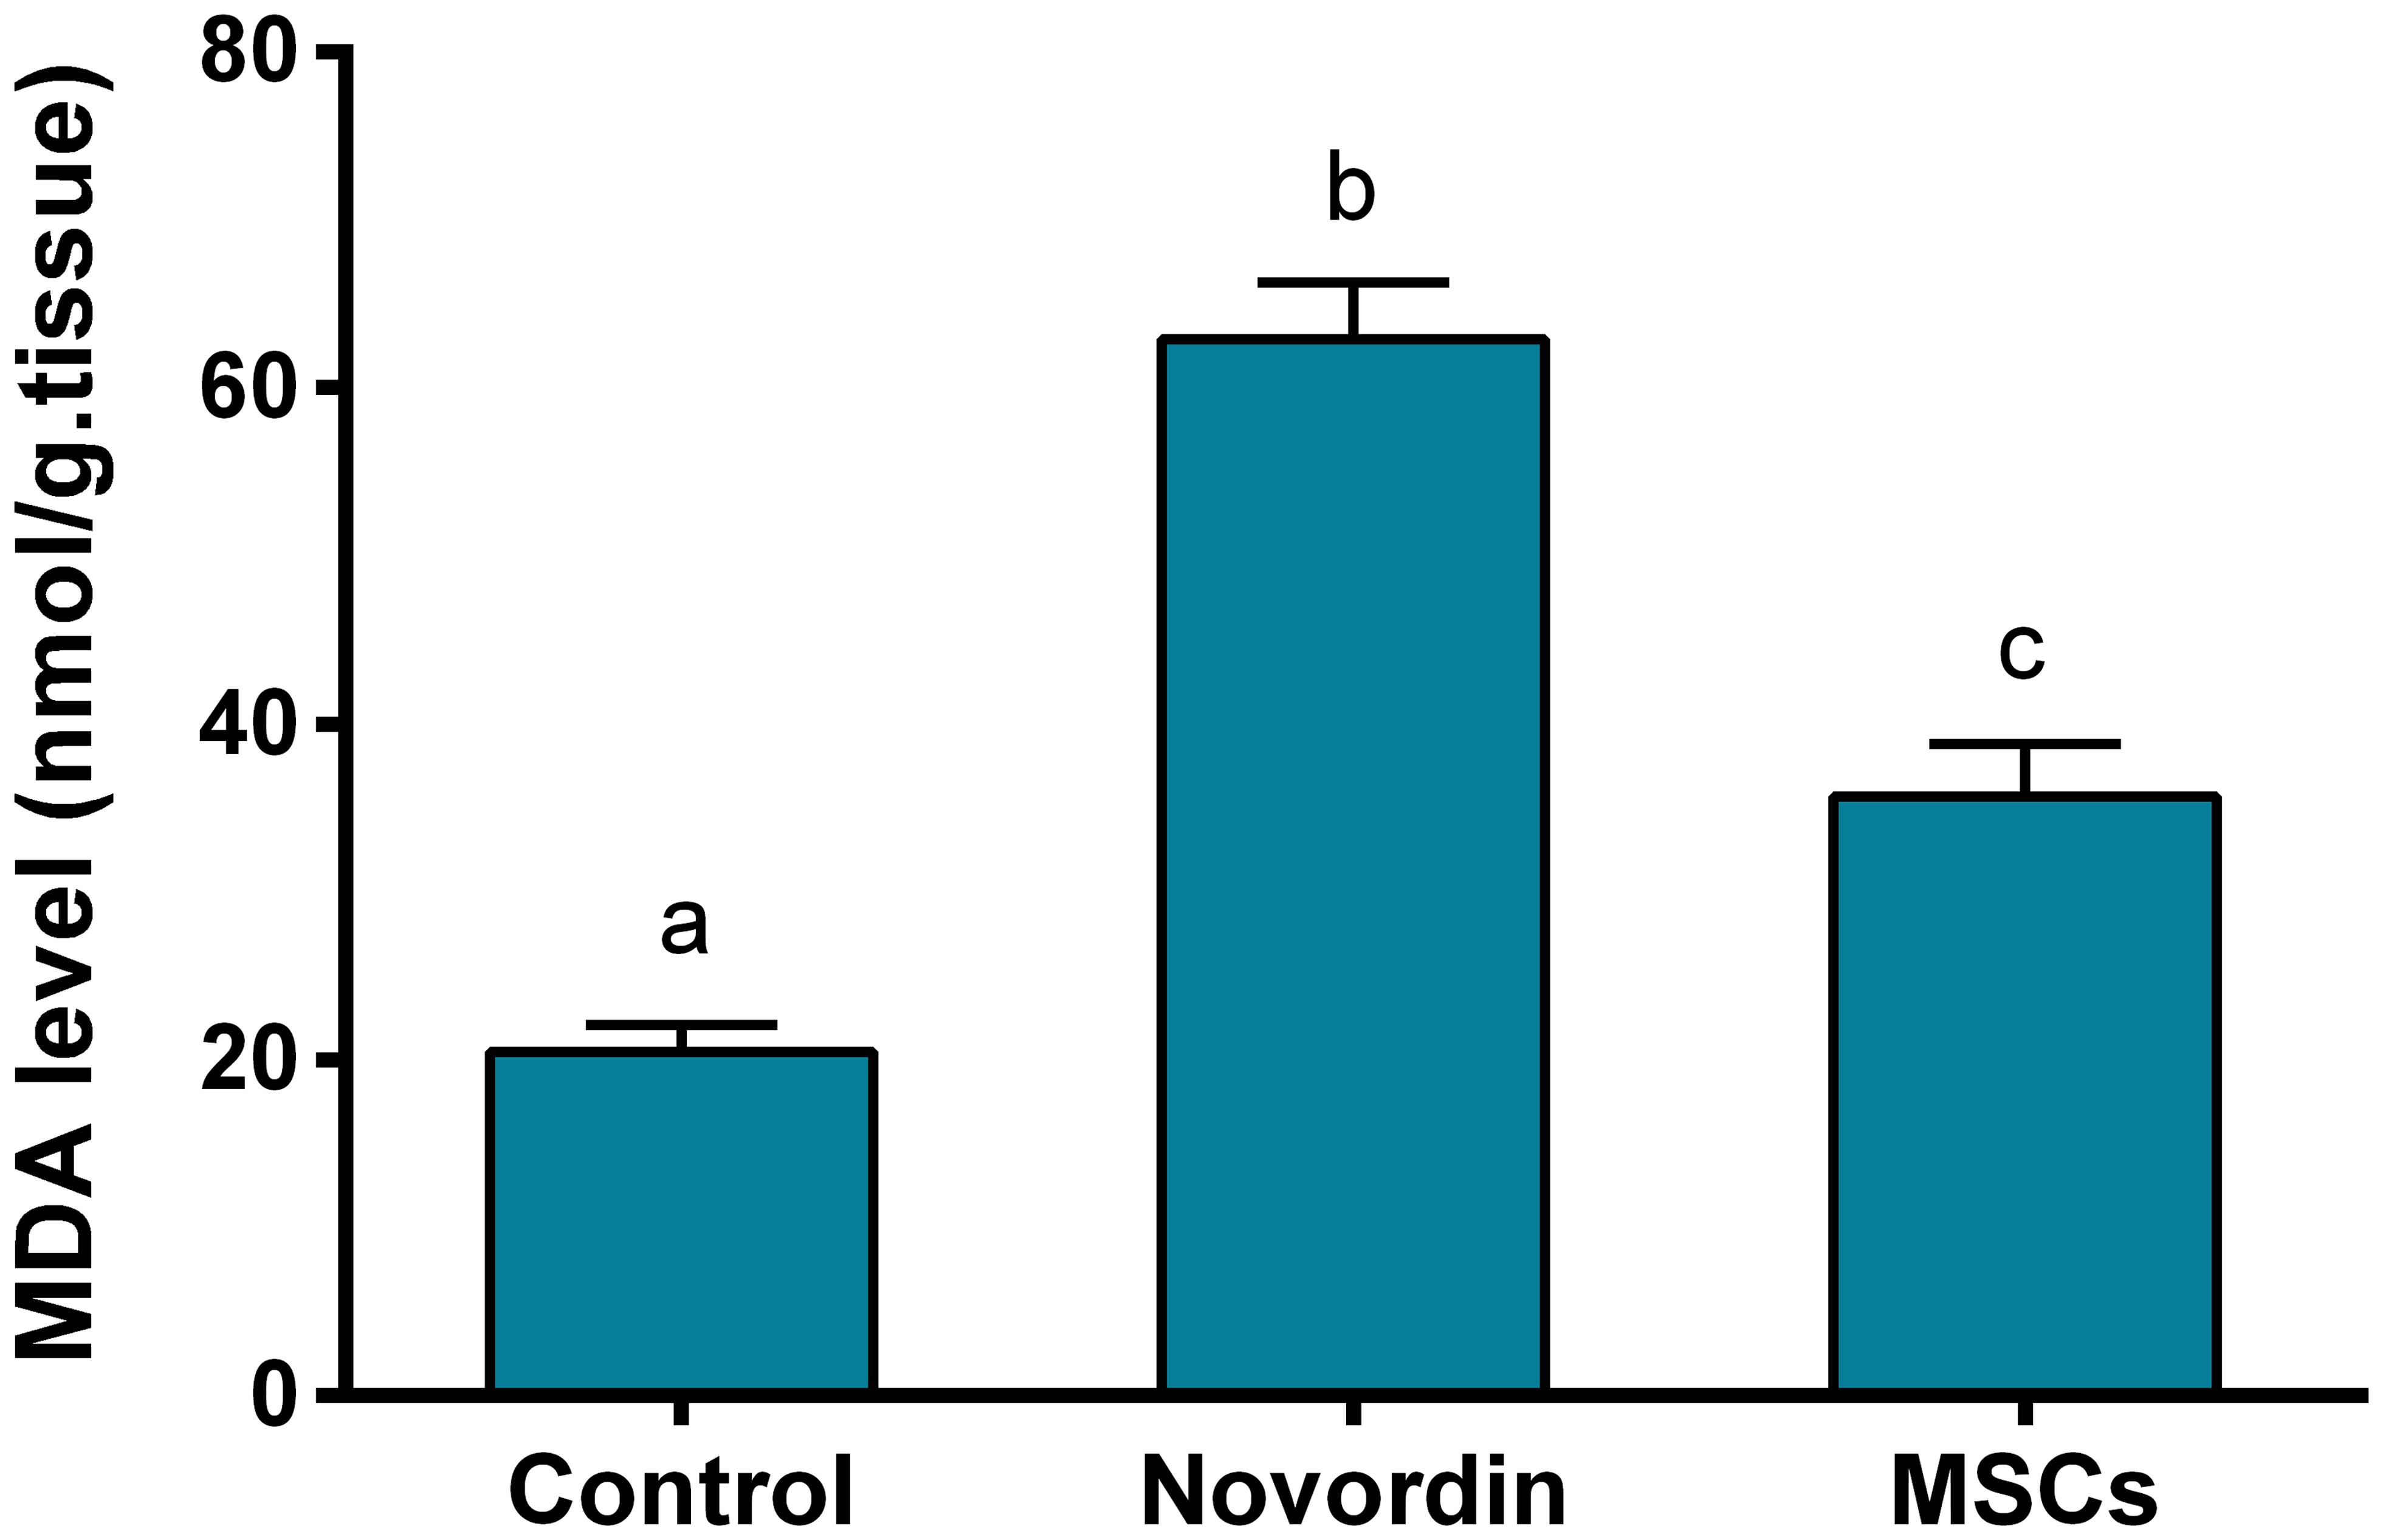 Impact of MSCs on the hepatic MDA level post-novordin intoxication.